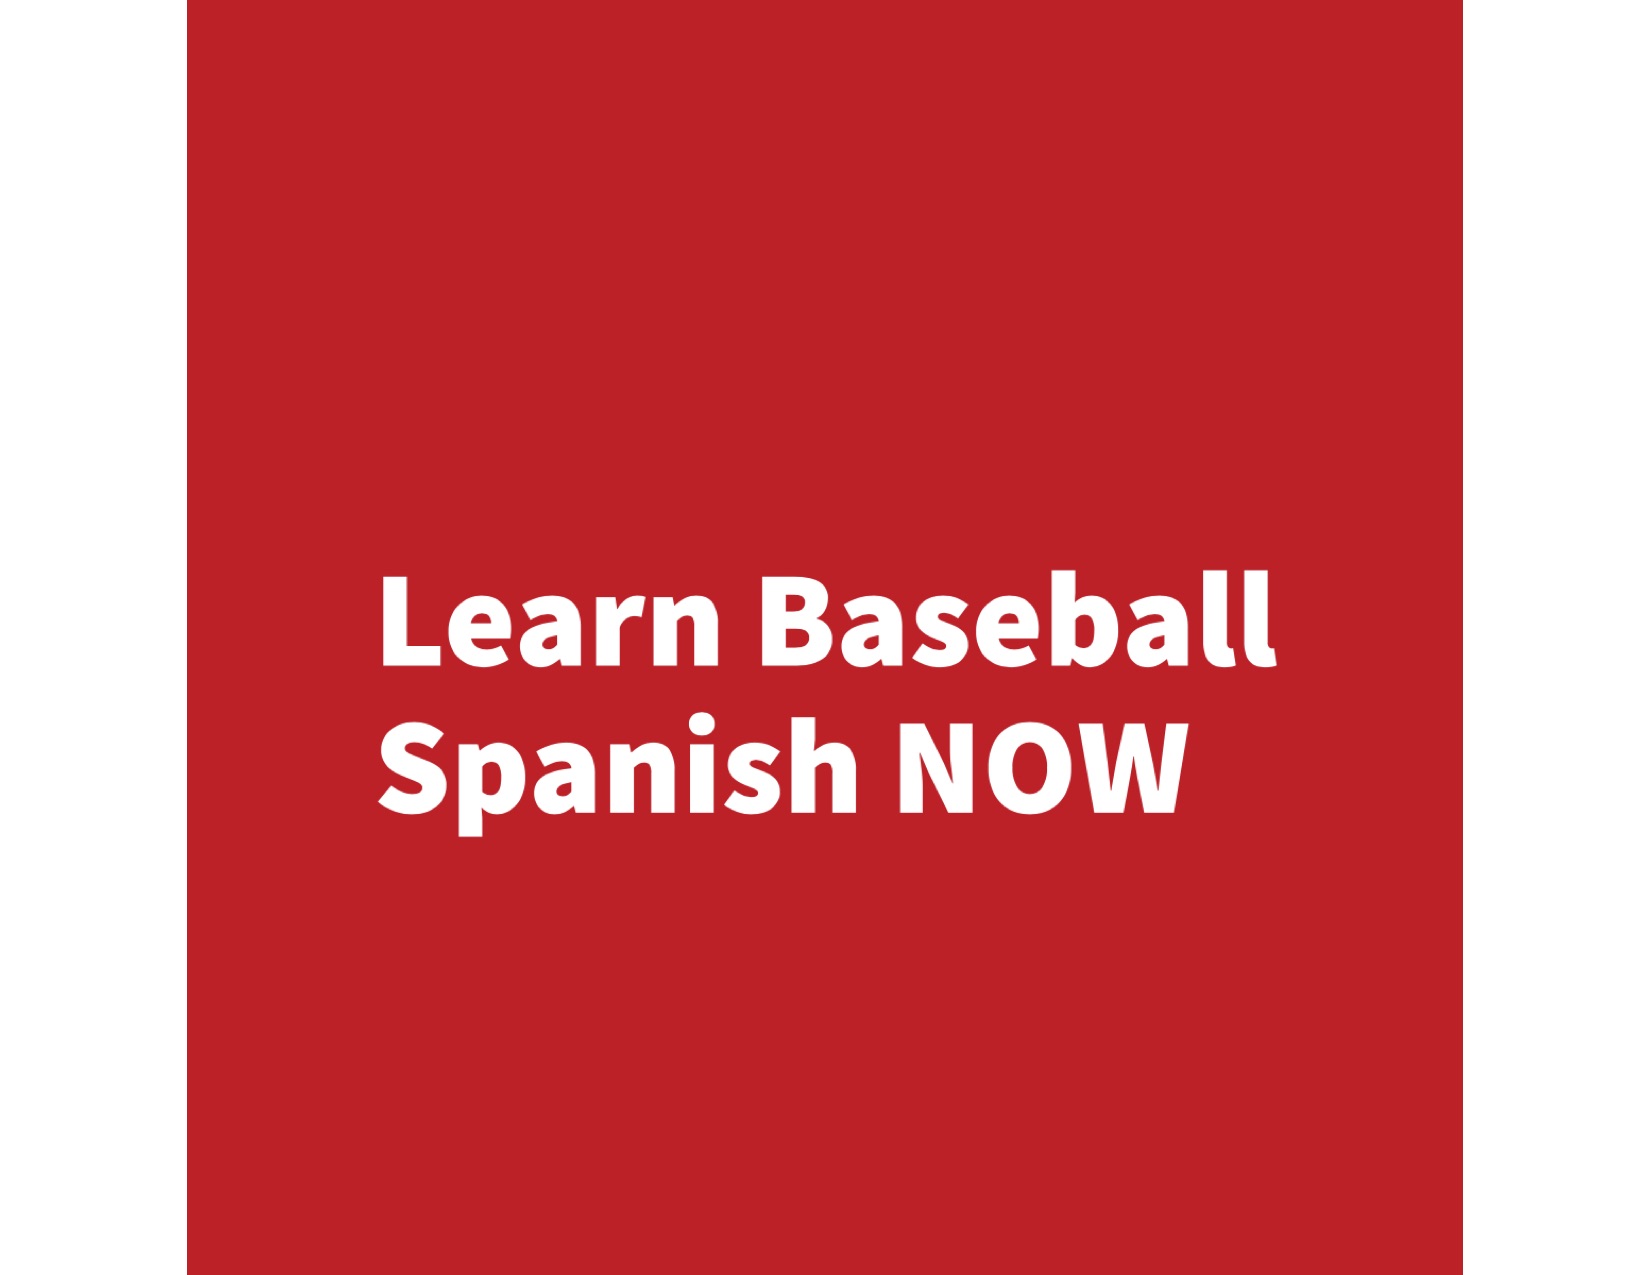 Learn Baseball Spanish NOW